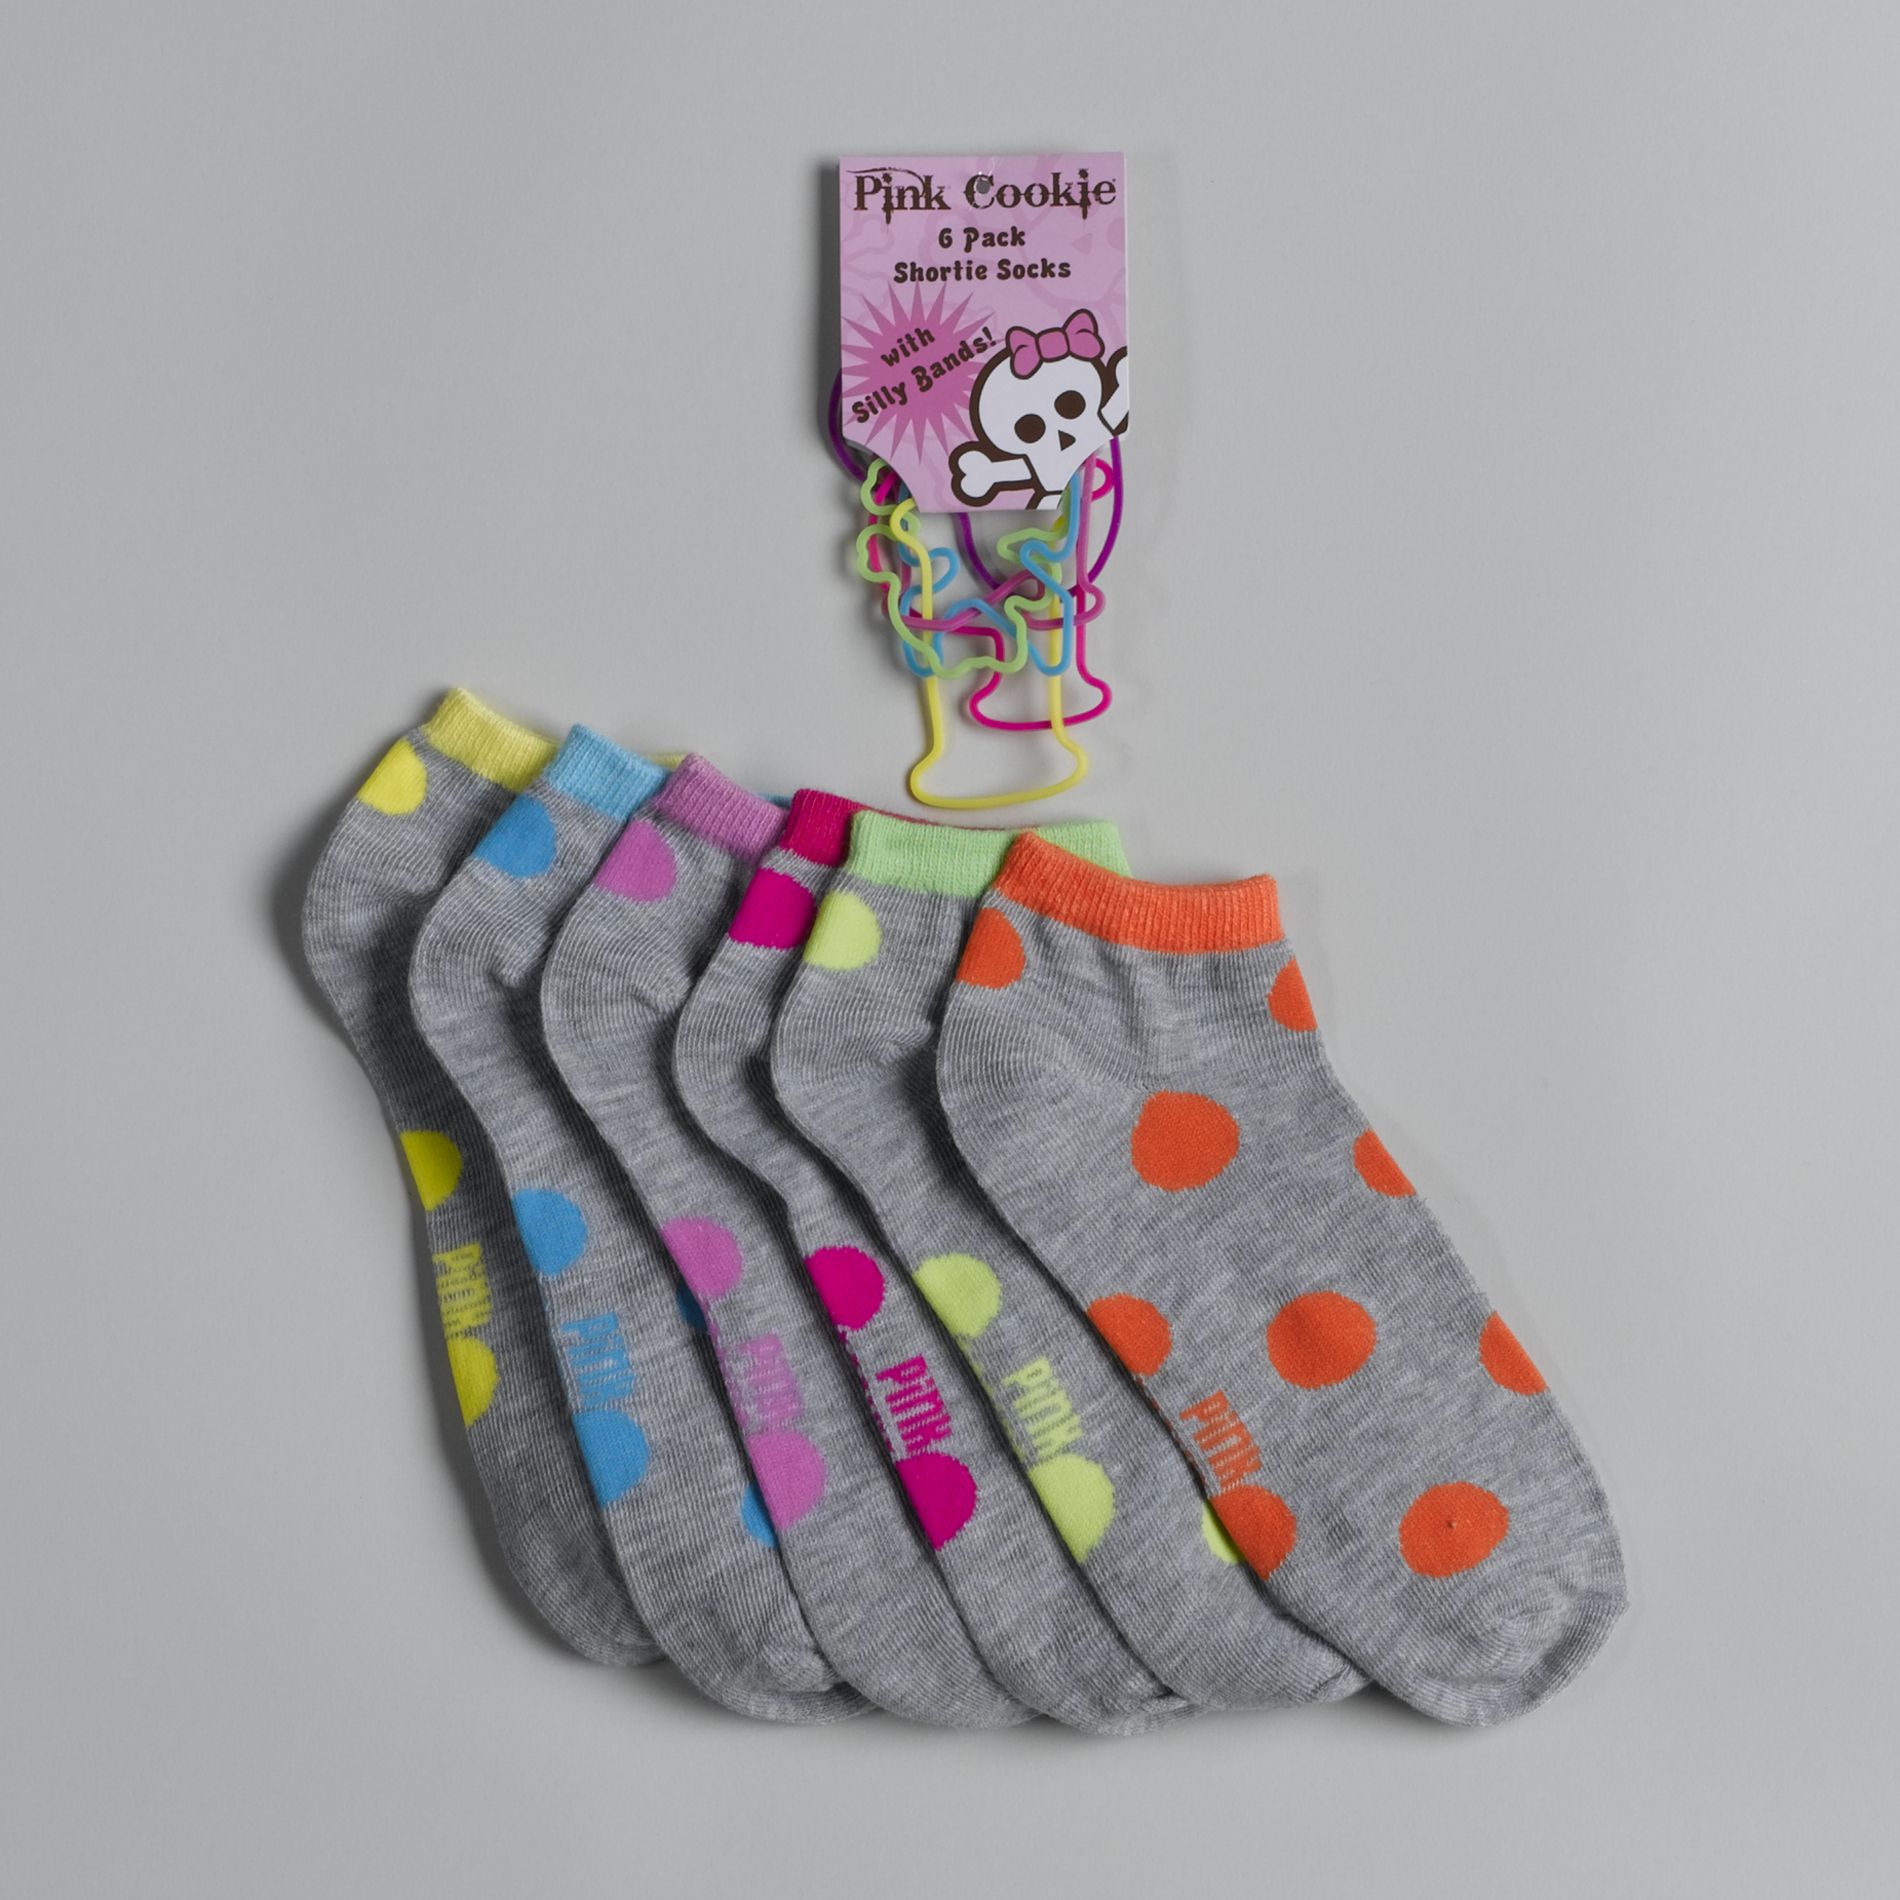 Pink Cookie 6 Pair Women's Low Cut Socks Bright Dots